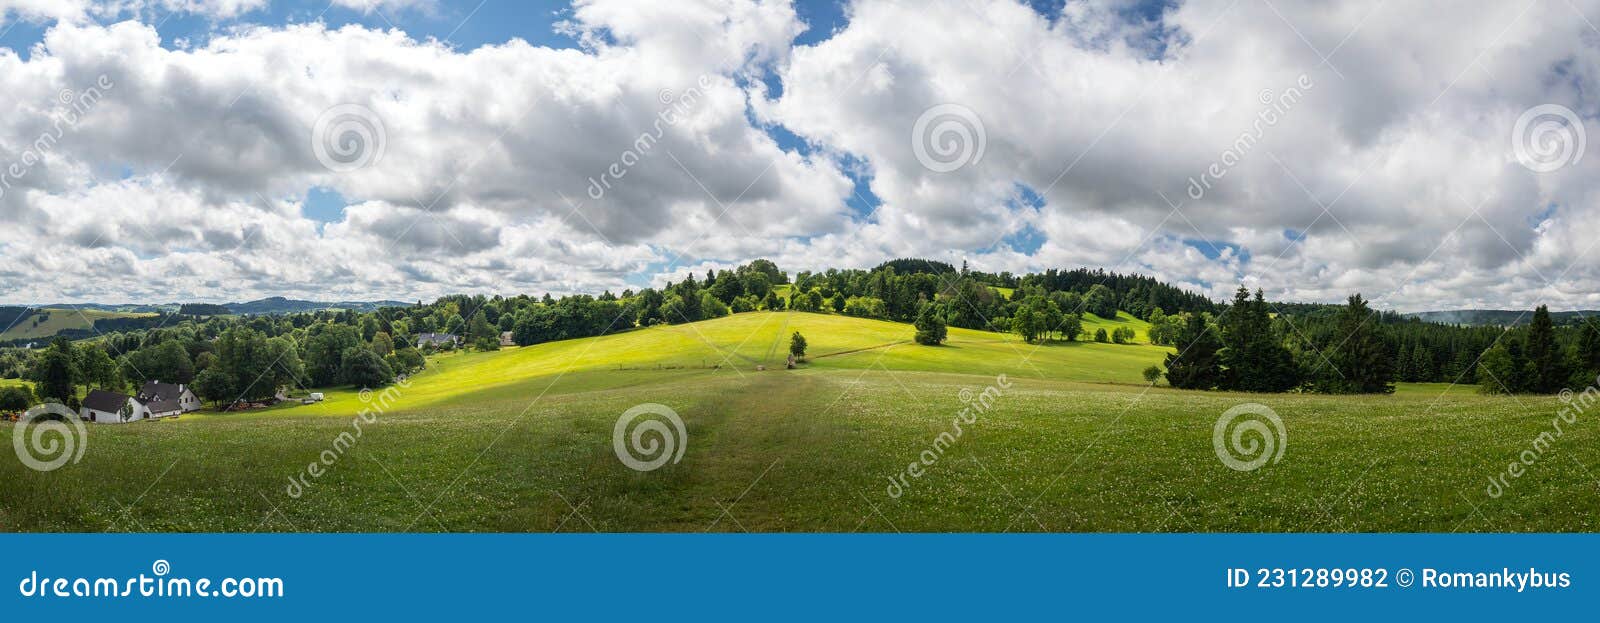 panorama landscape in the vysocina region - highlands region, czech republic